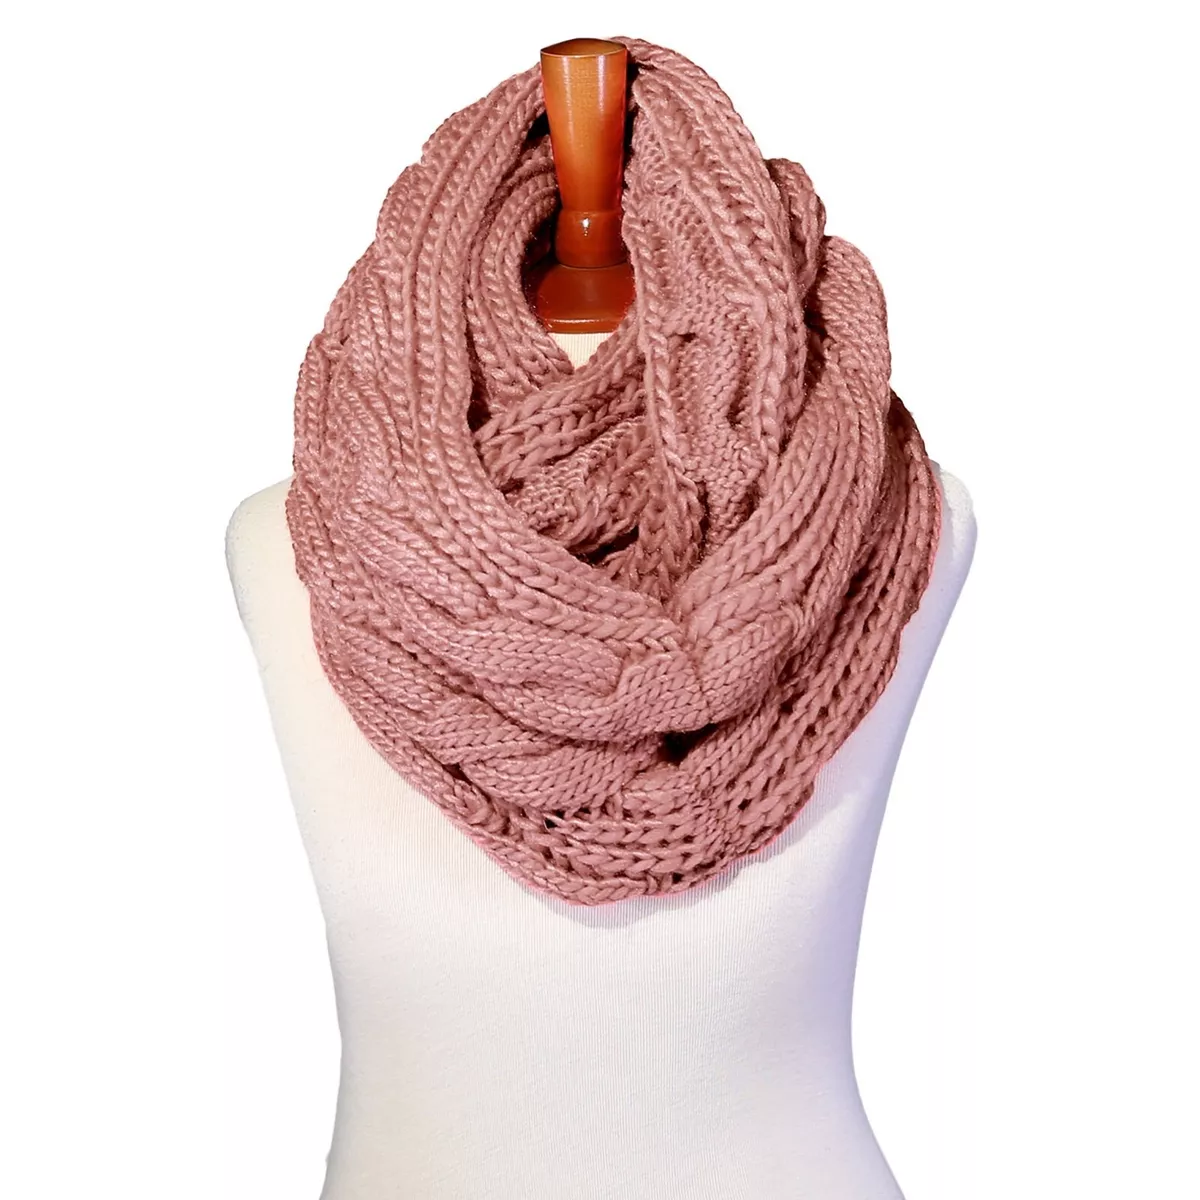 BASICO Warm Knit Winter Scarfs for Women Coral Infinity Scarf